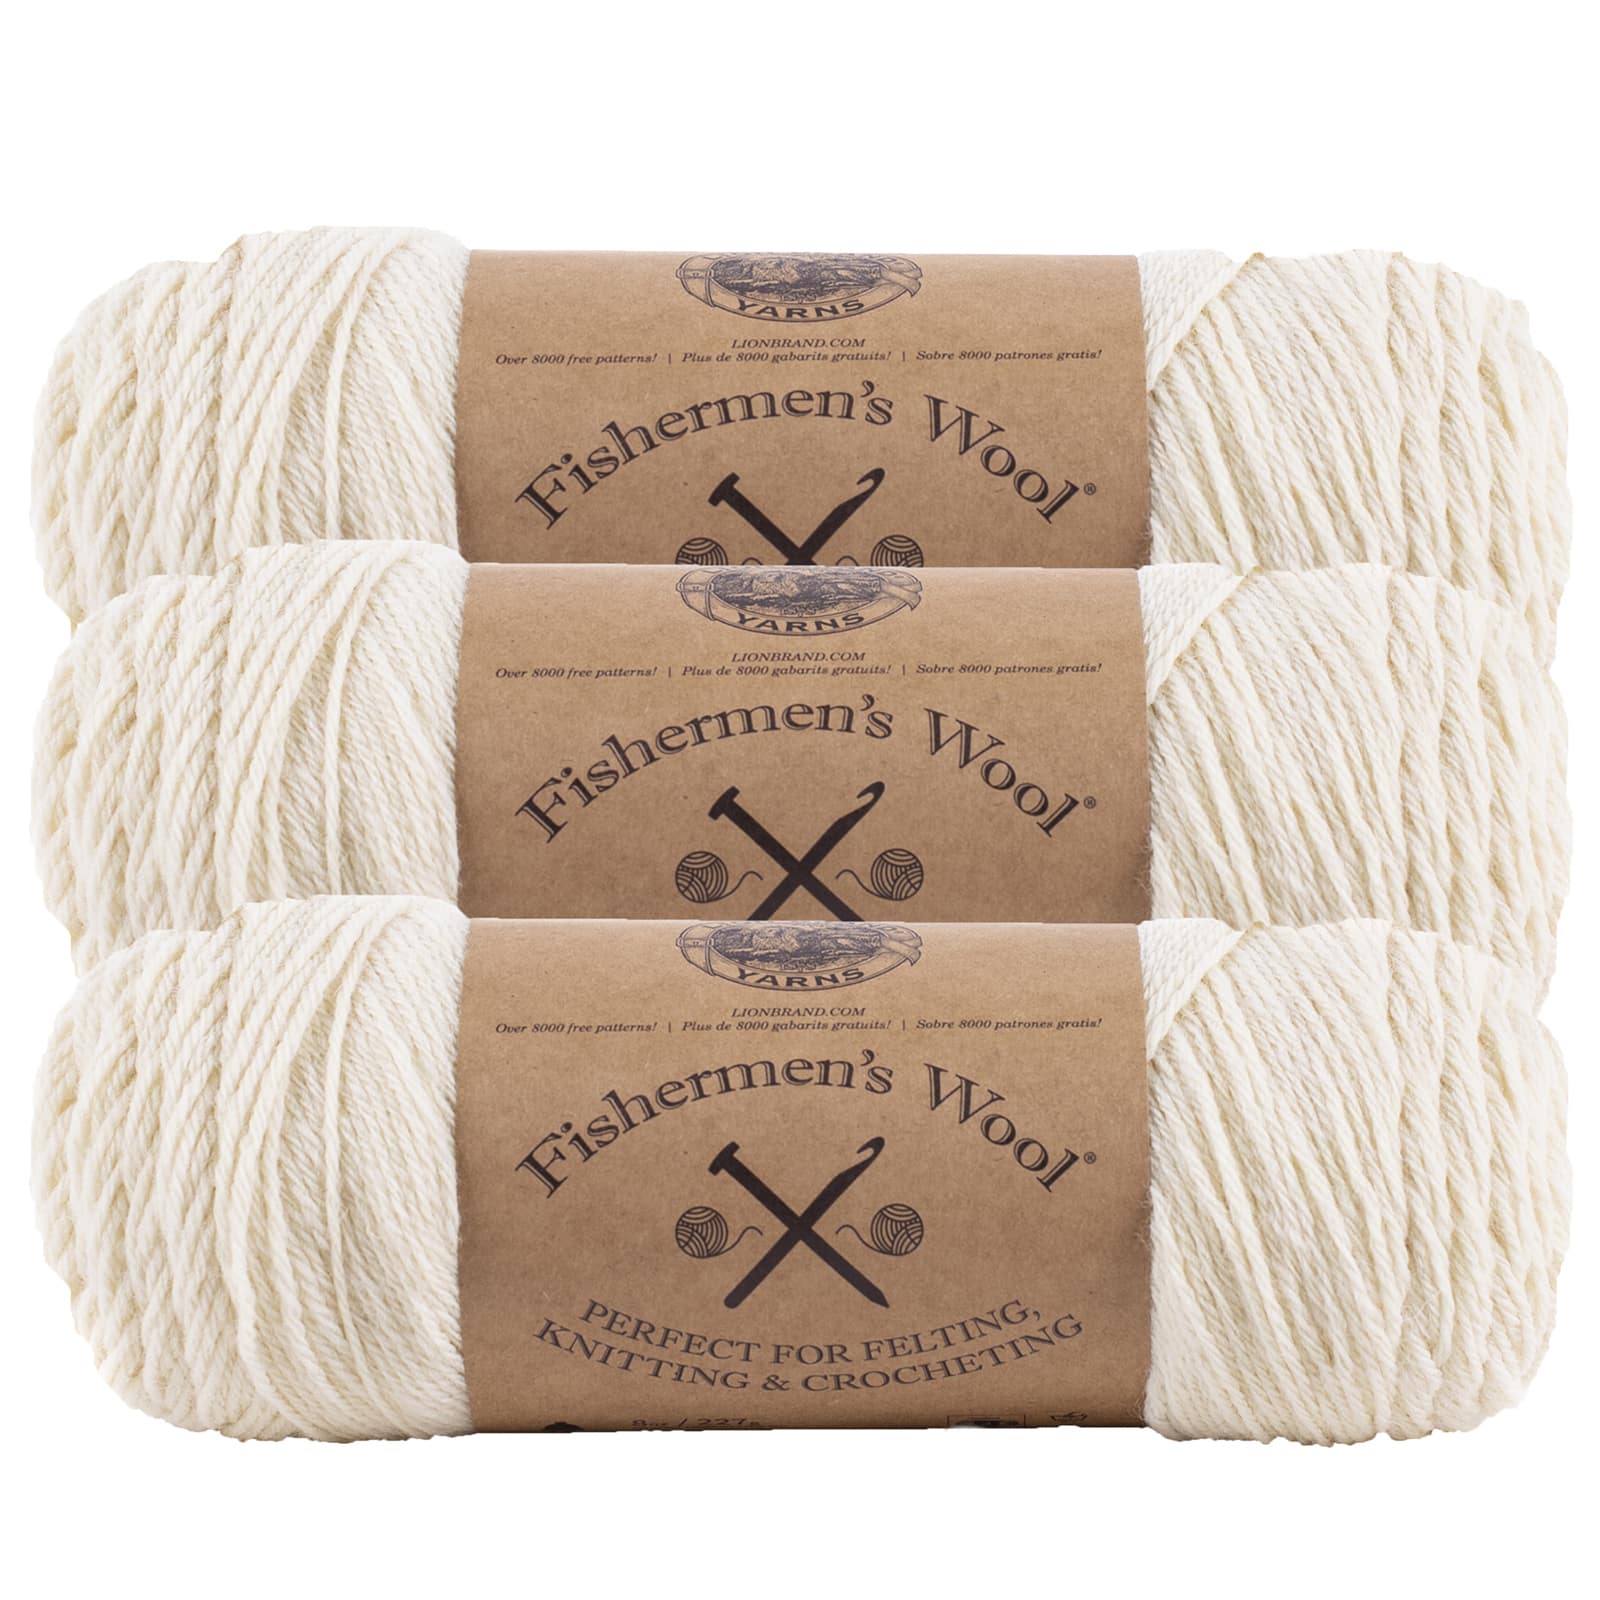 Lion Brand Fishermen's Wool, Knitting Yarn & Wool